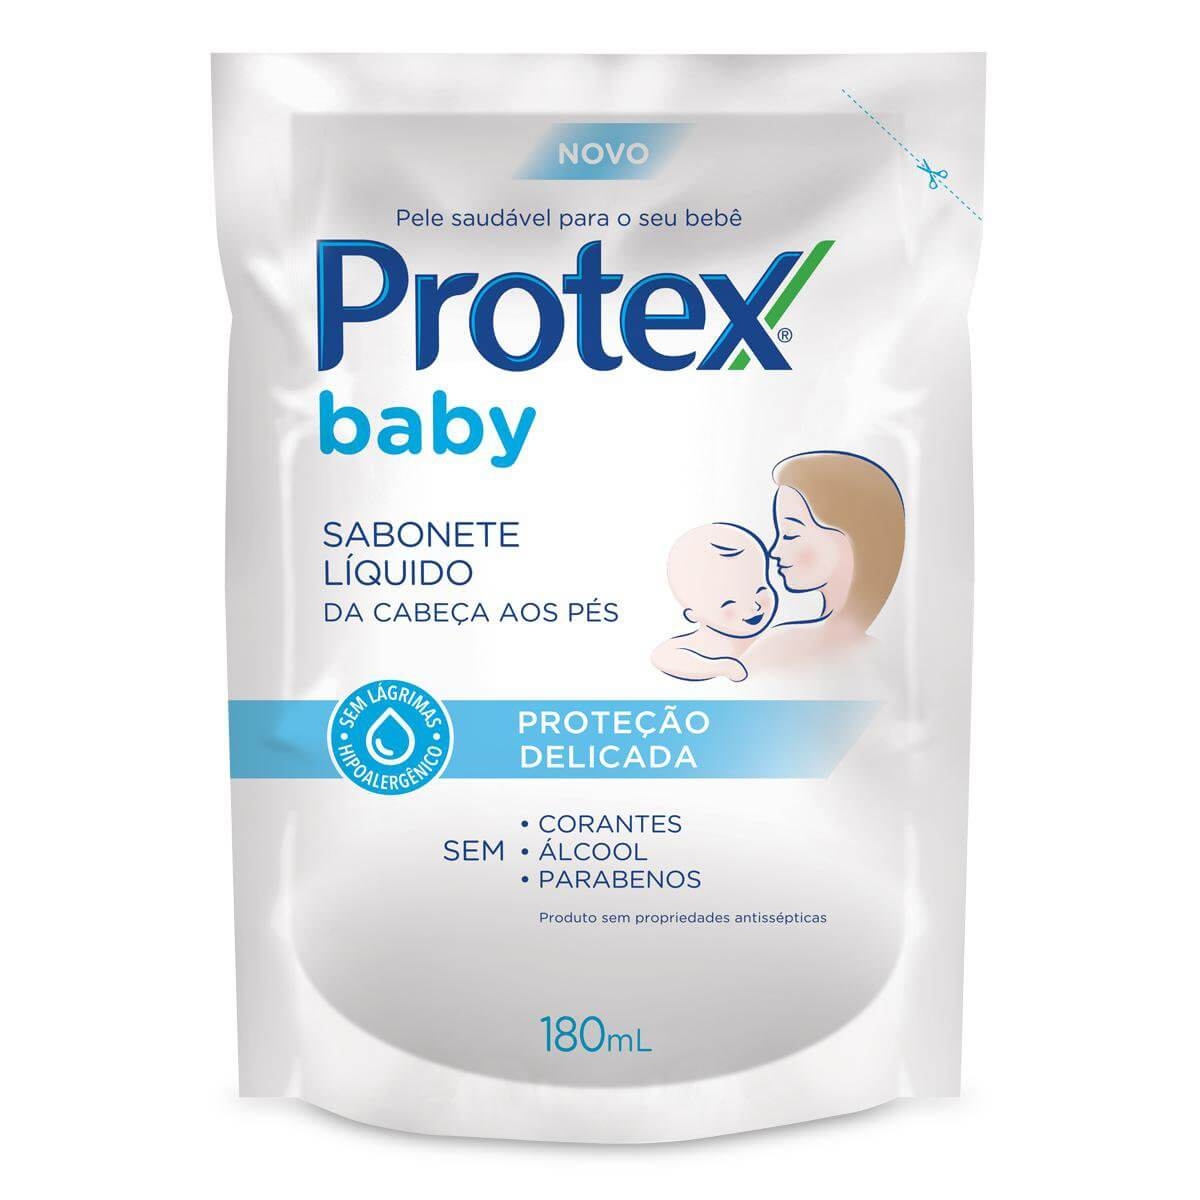 Refil Sabonete Líquido Protex Baby Cabeça aos Pés 180ml